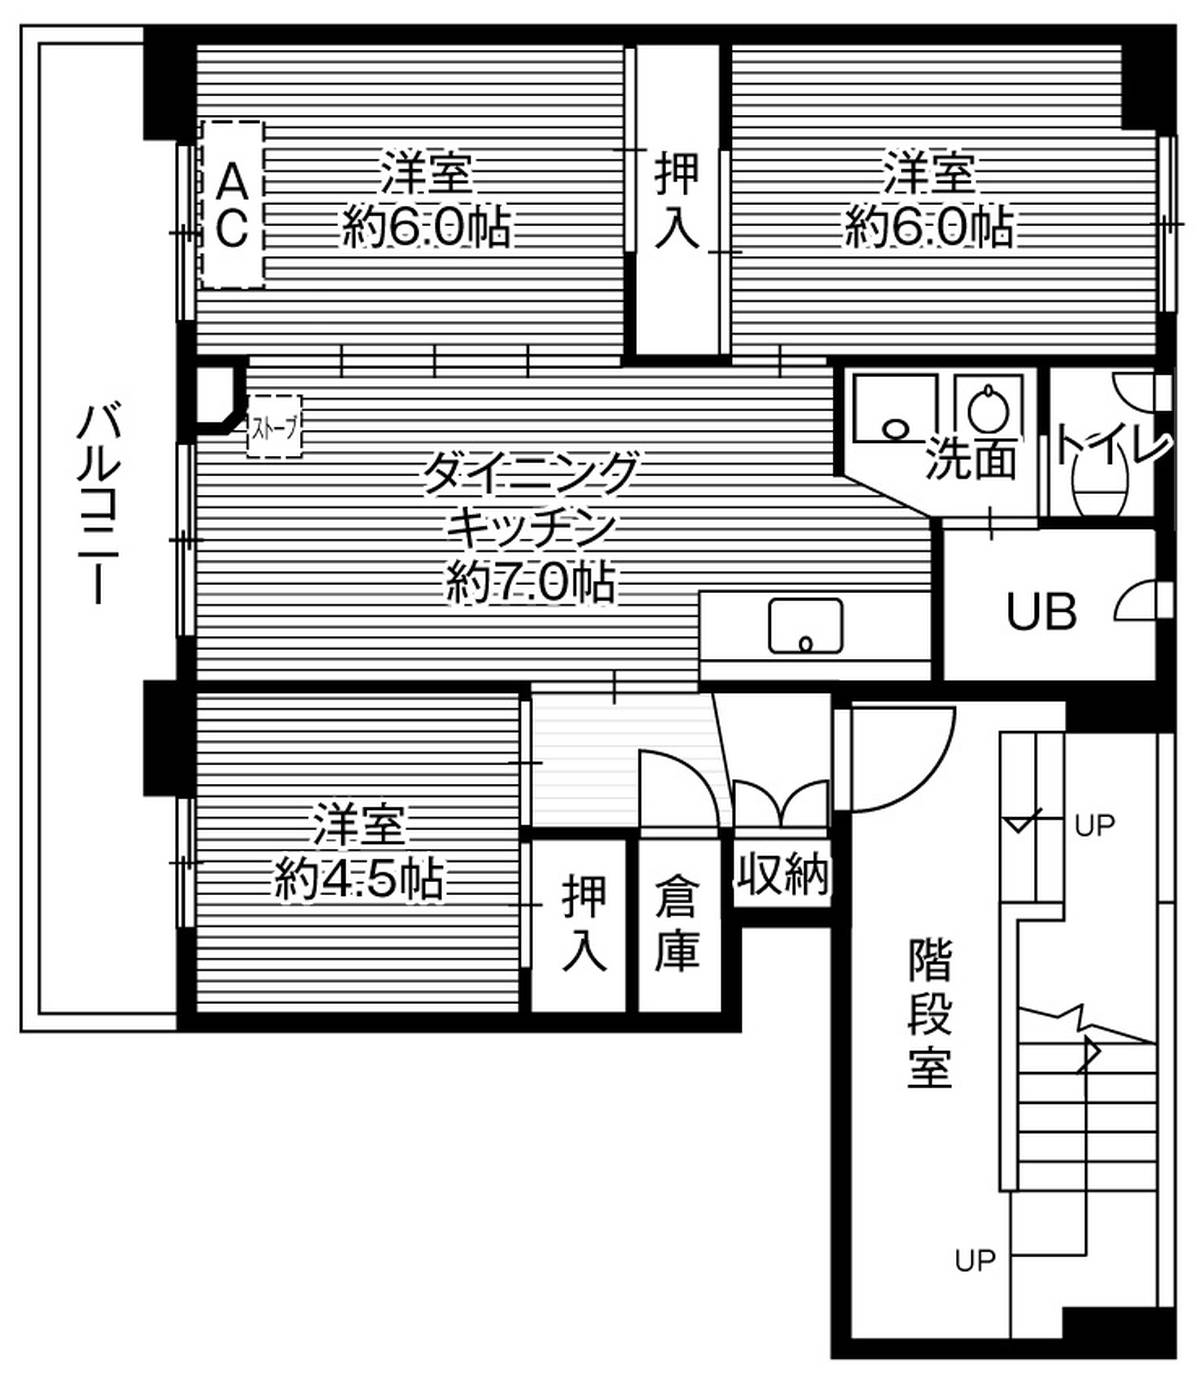 3DK floorplan of Village House Ebetsu in Ebetsu-shi